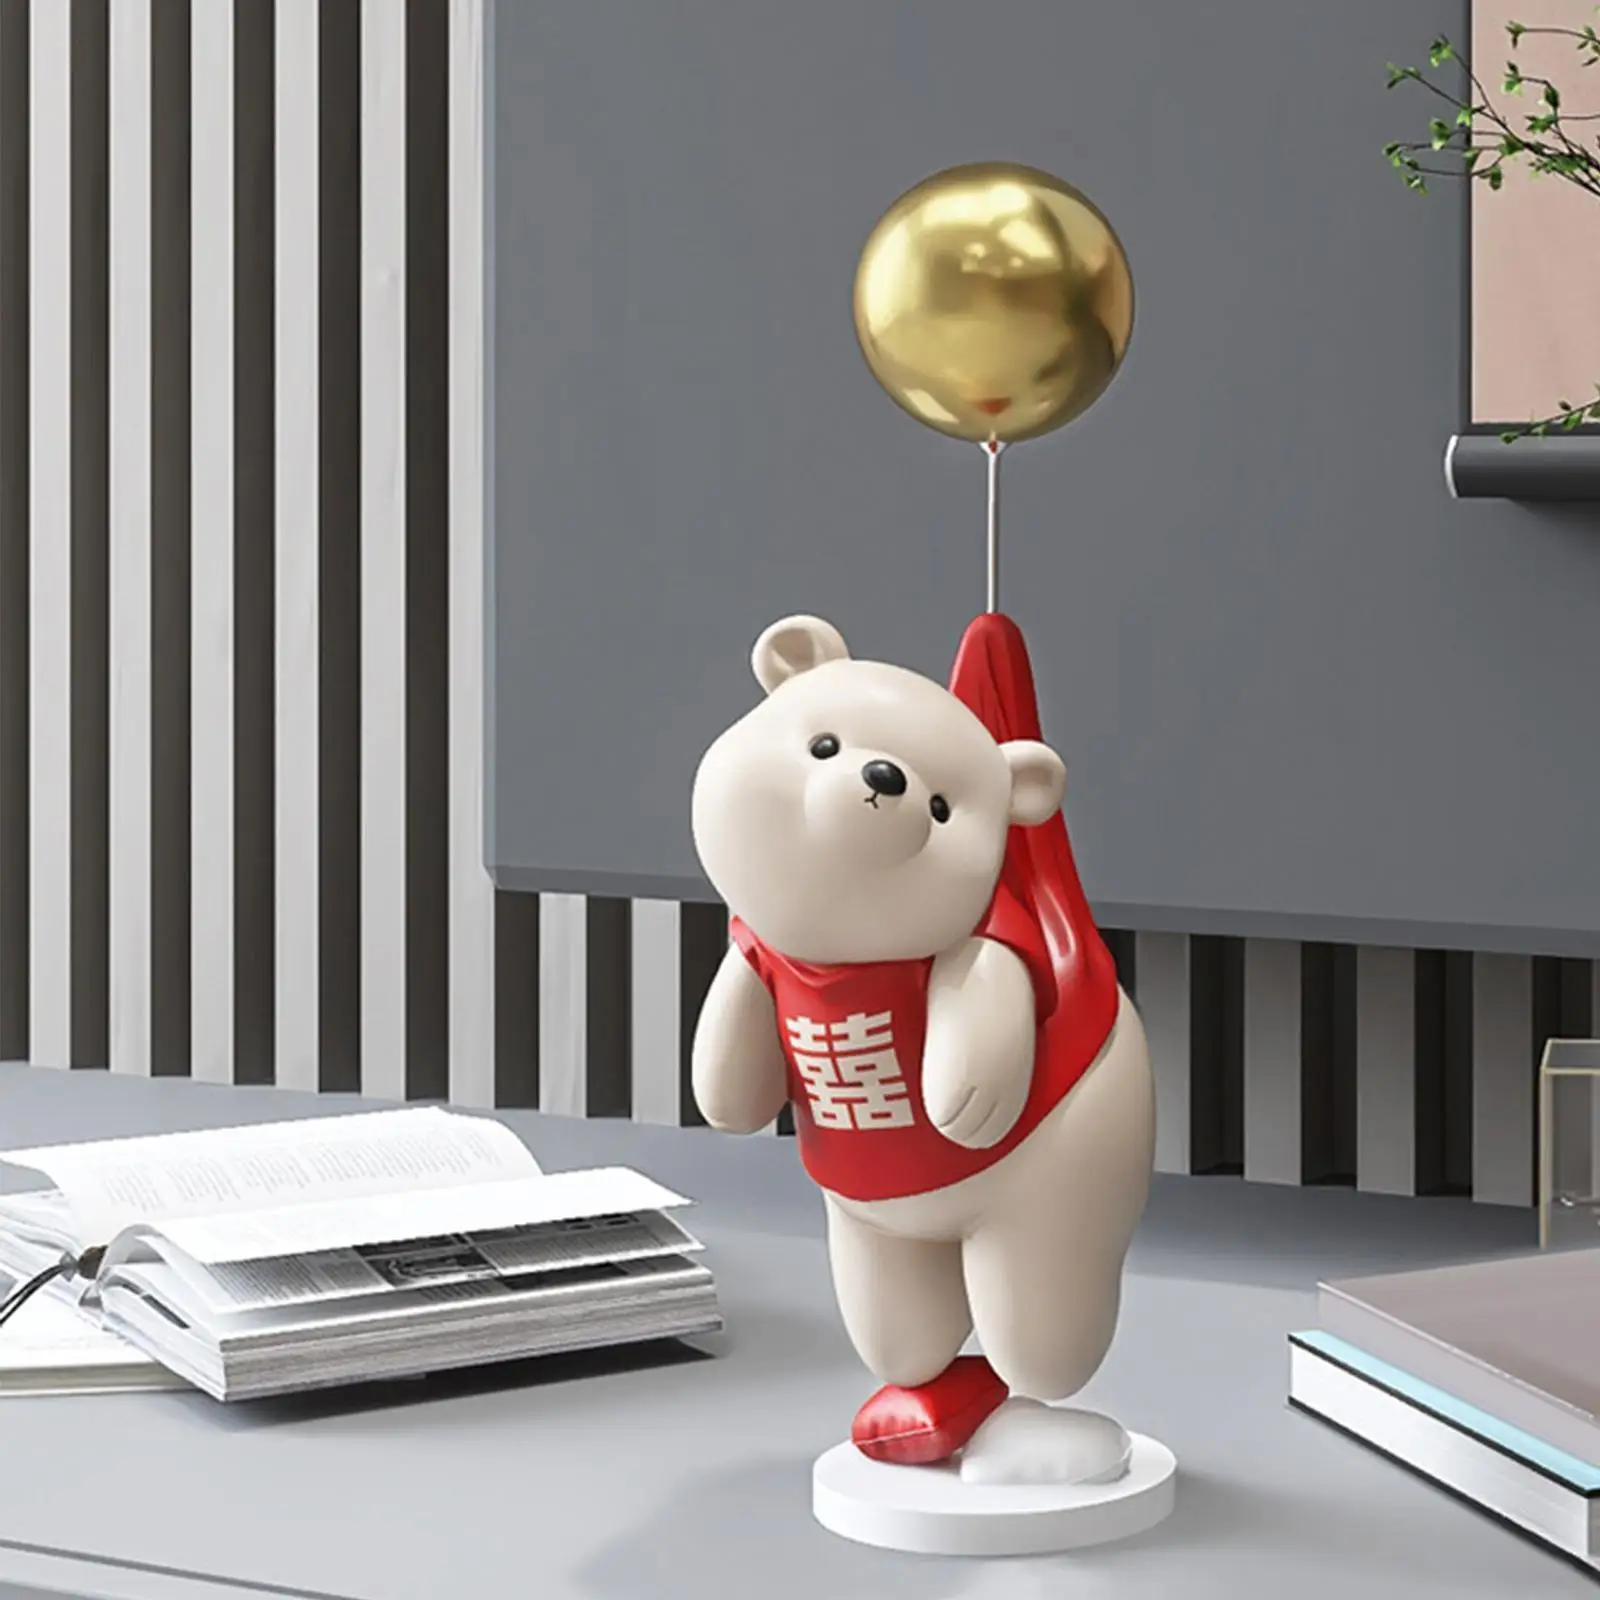 Polar Bear Figurine Resin Statue for Living Room Bedroom Desktop Decoration